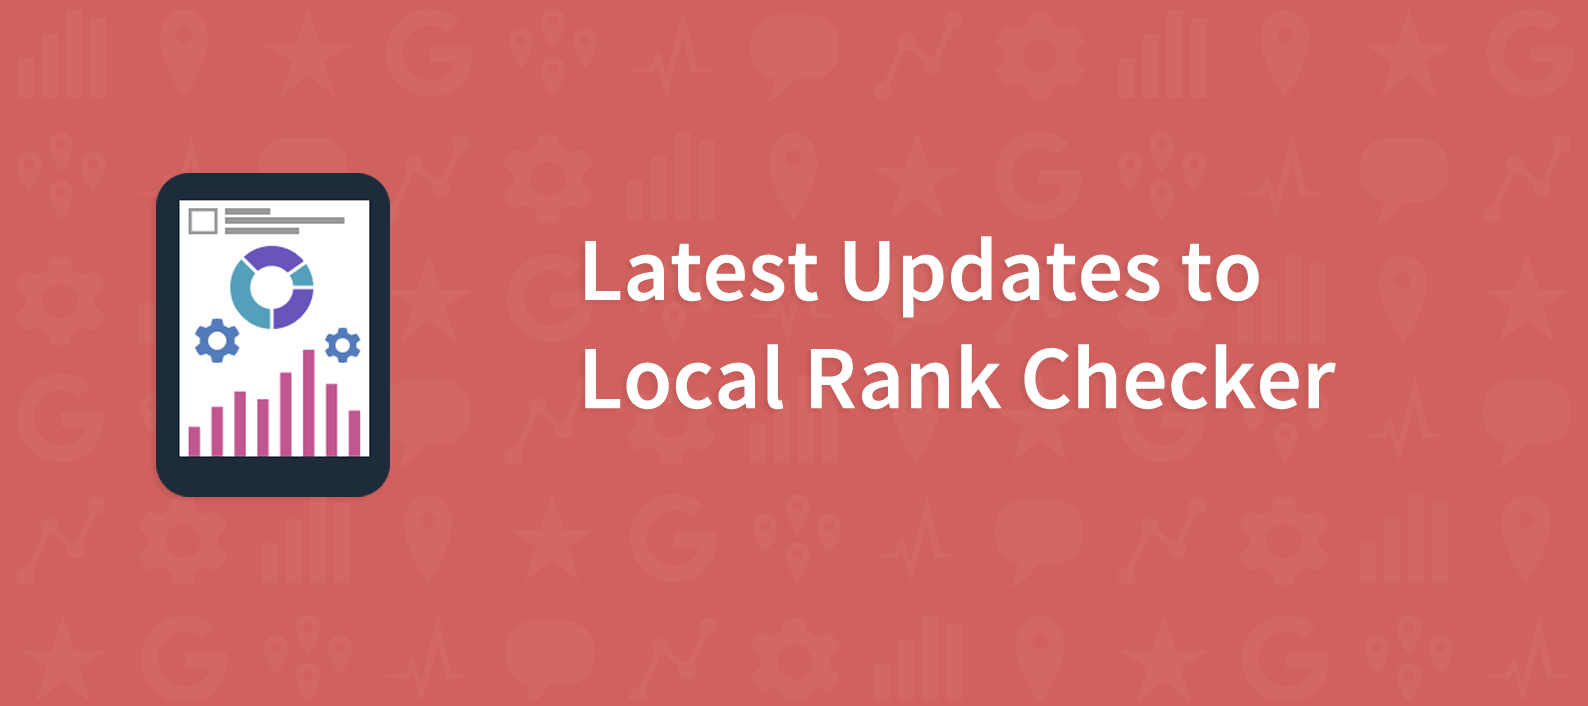 site rank checker